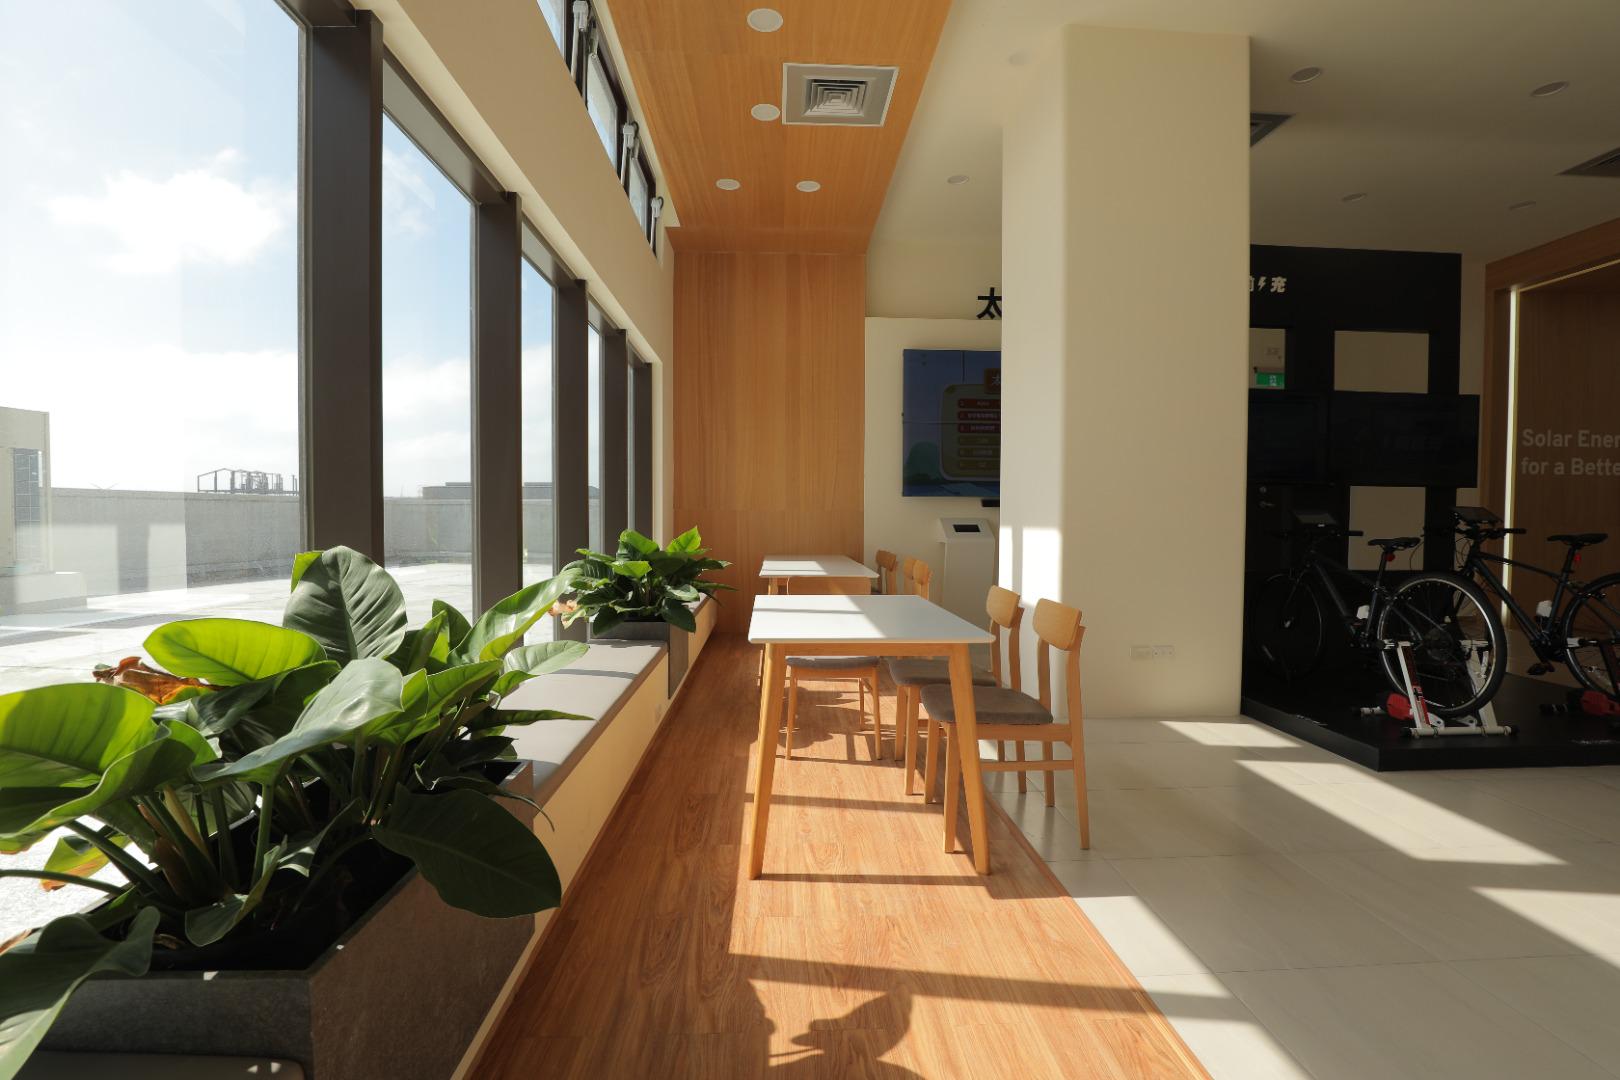 Sunlight Education Exhibition Hall, Wang Yi Design, KingOneDesign, Commercial Air Design, Pavilion Design